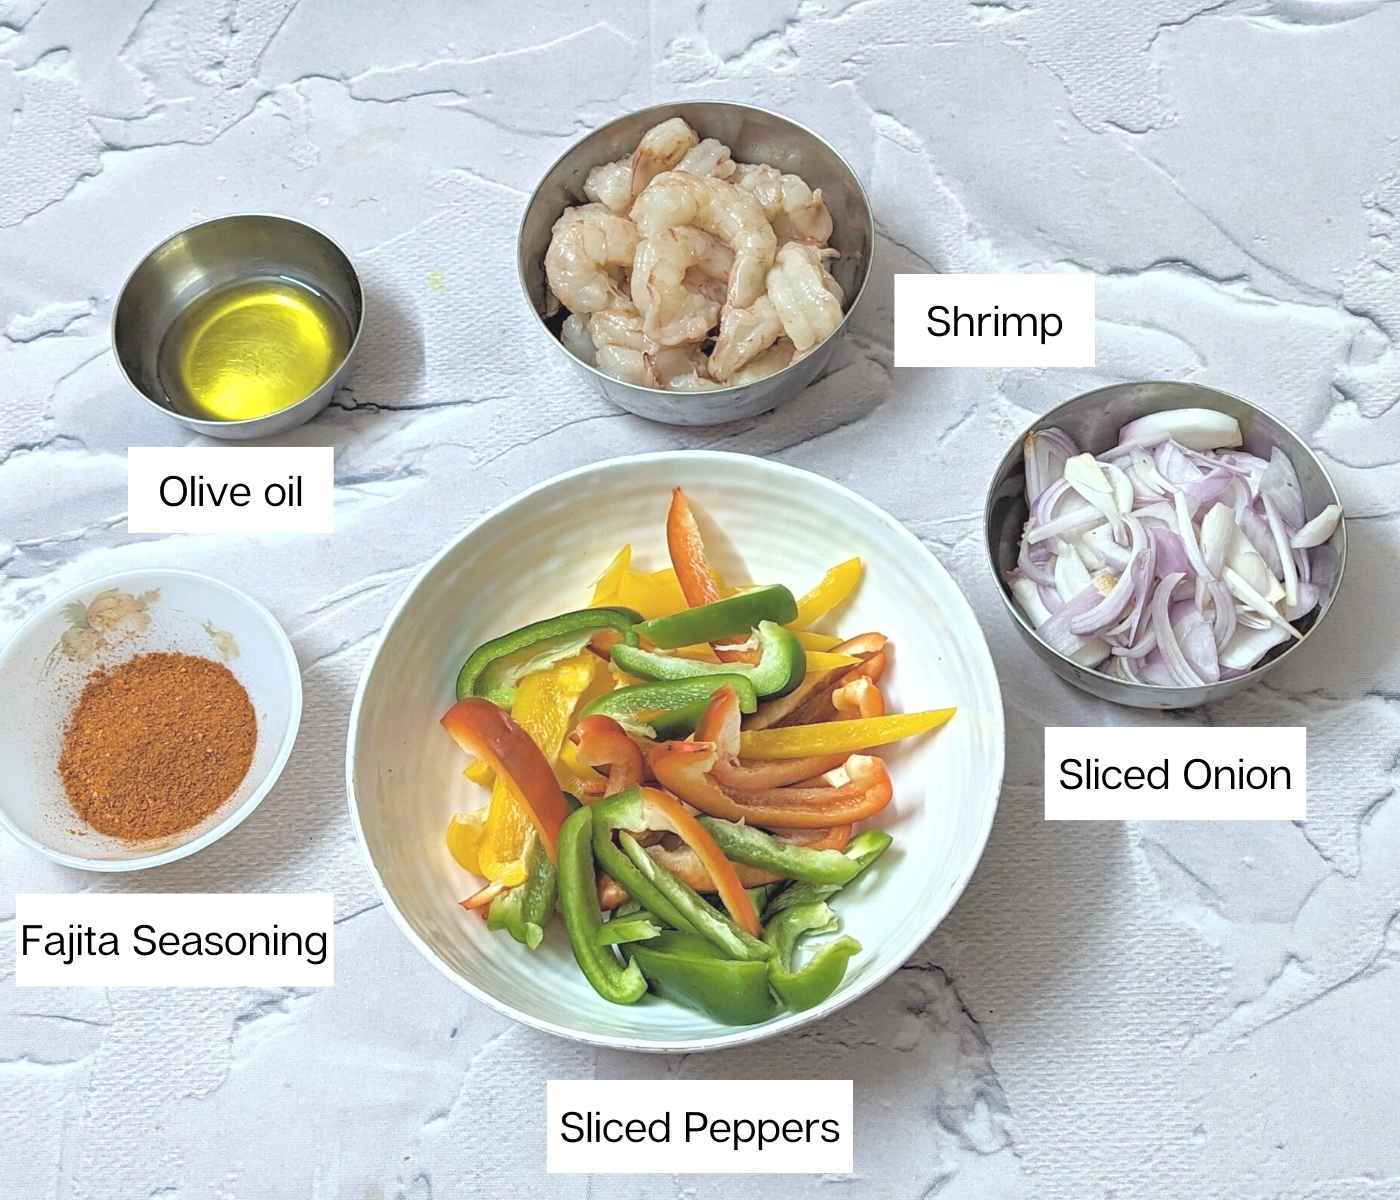 Ingredients for making shrimp fajitas: shrimp, sliced onion, peppers, olive oil and fajita seasoning.